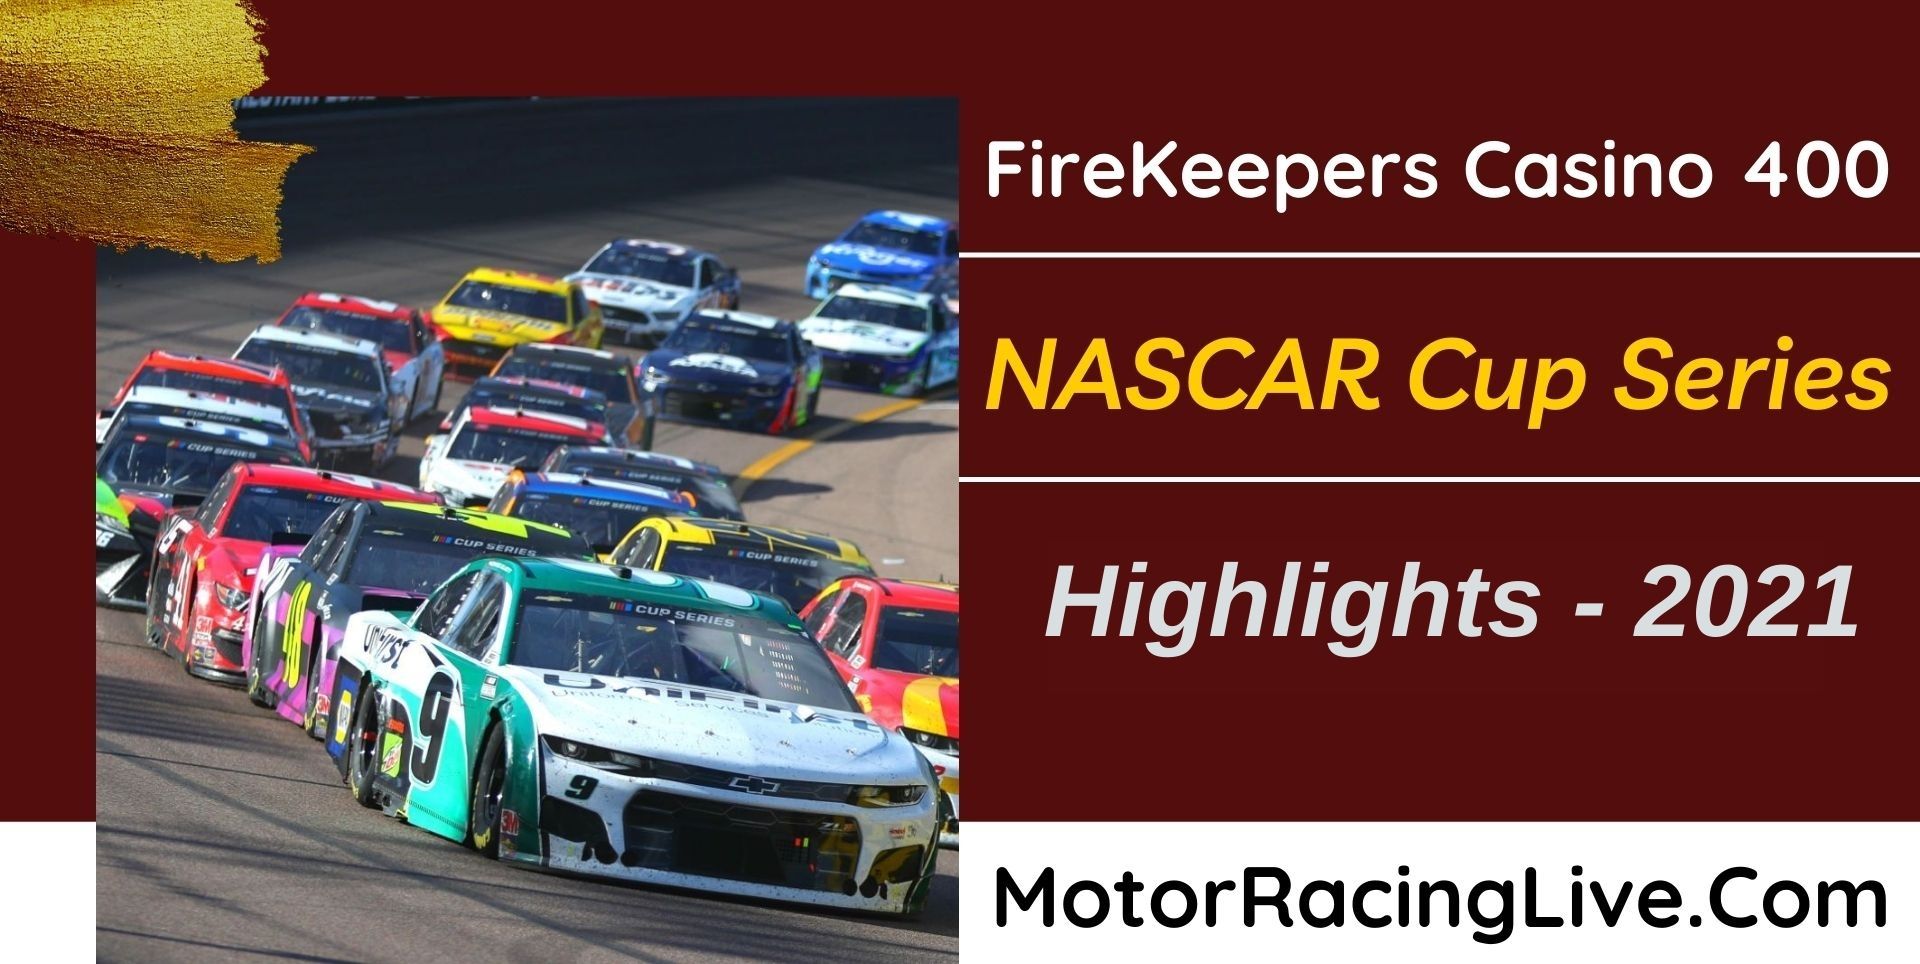 Firekeepers Casino 400 Highlights 2021 NASCAR Cup Series